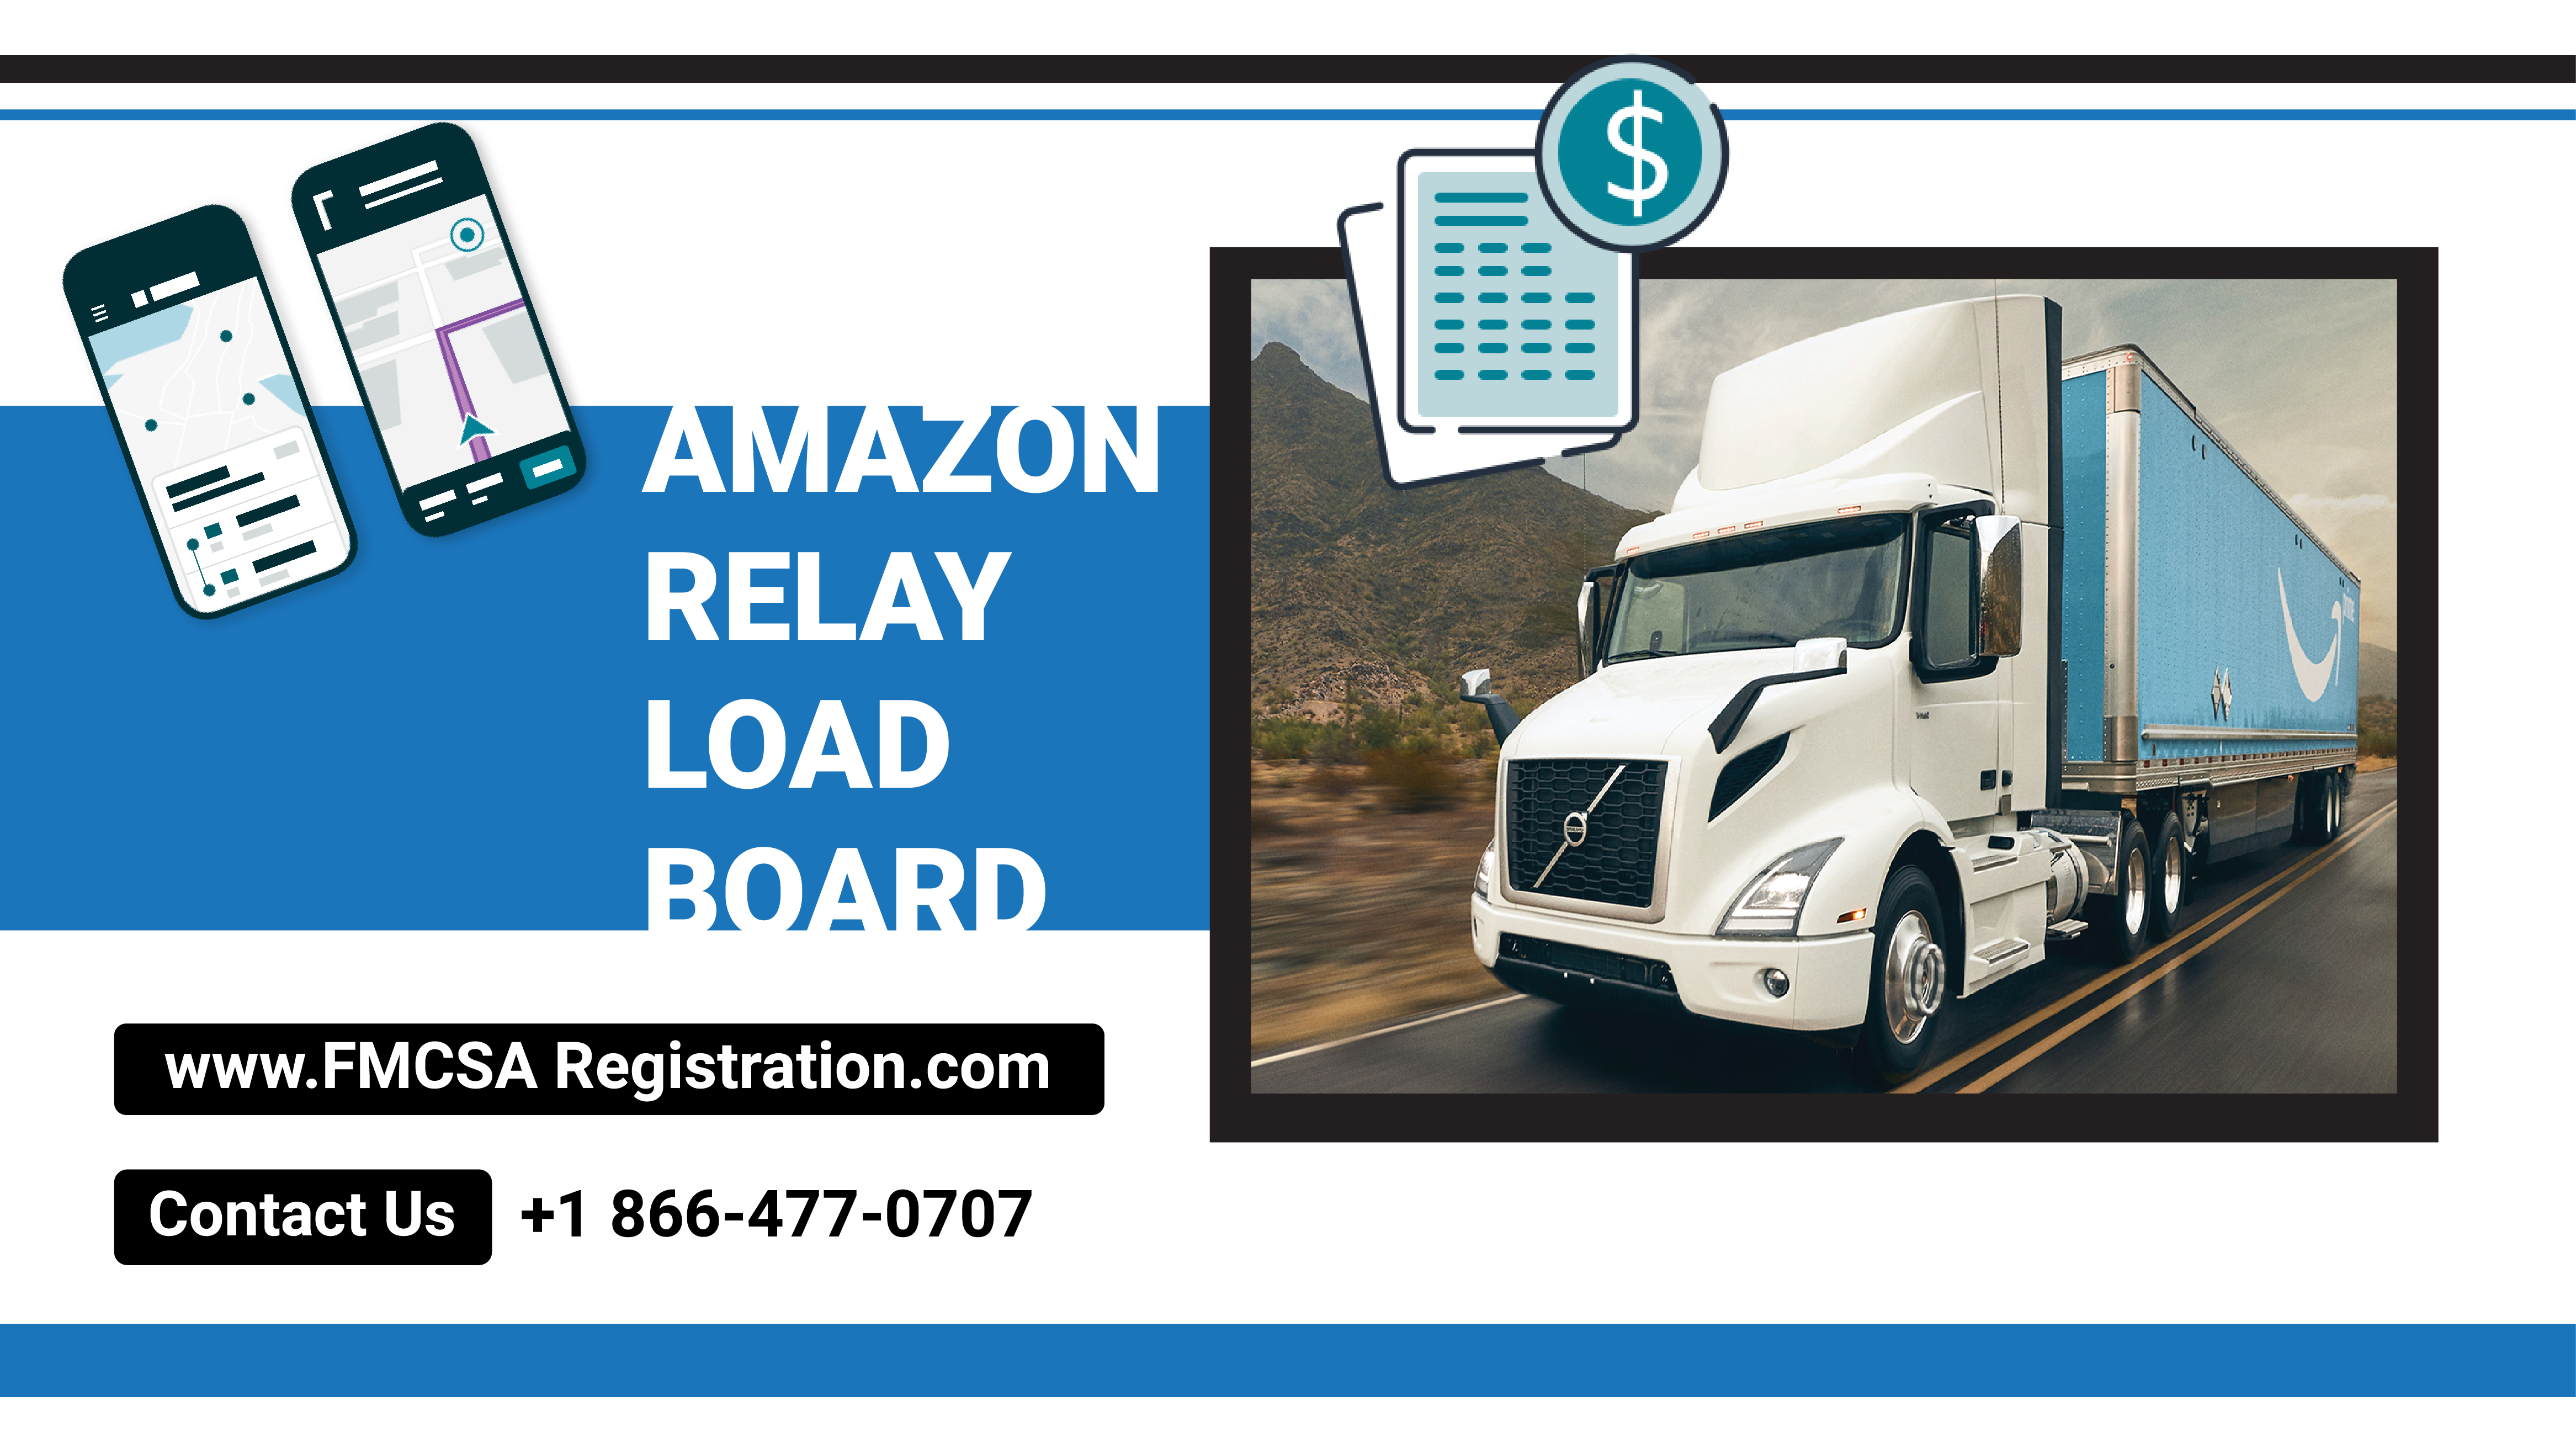 Amazon Relay Box Truck Requirements